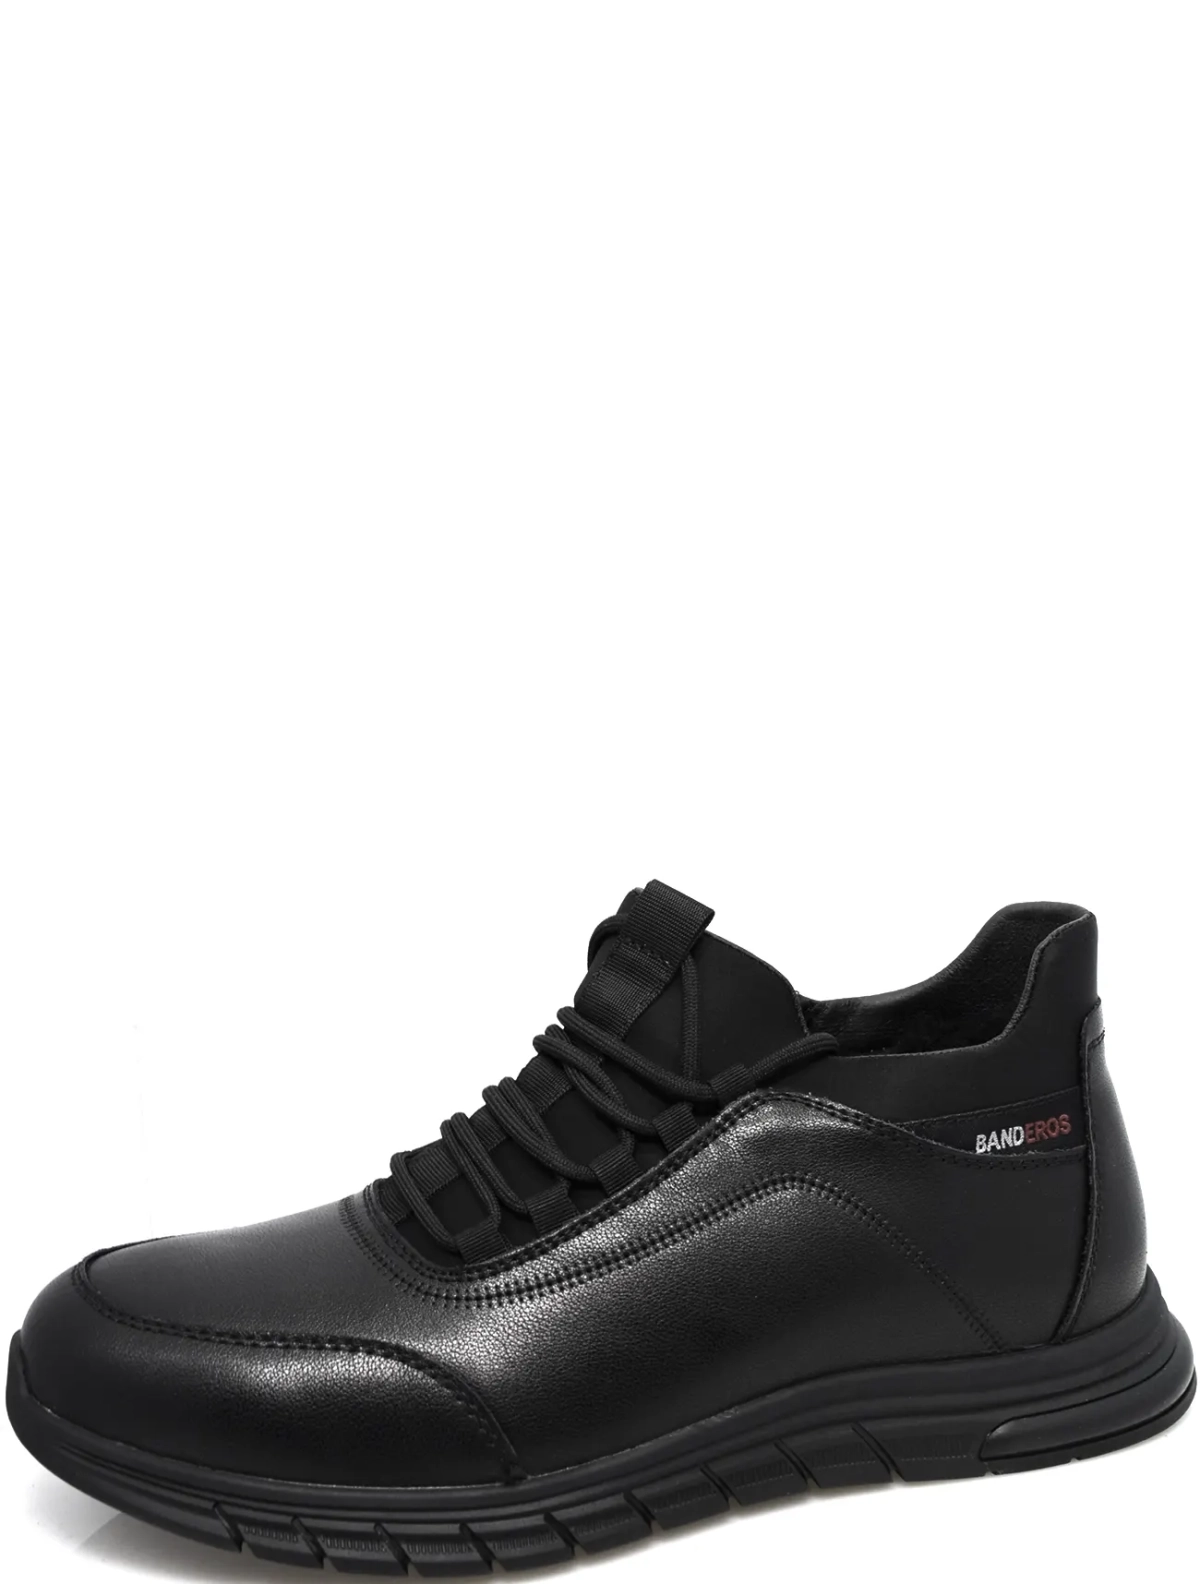 Banderos NX79221-2 мужские ботинки